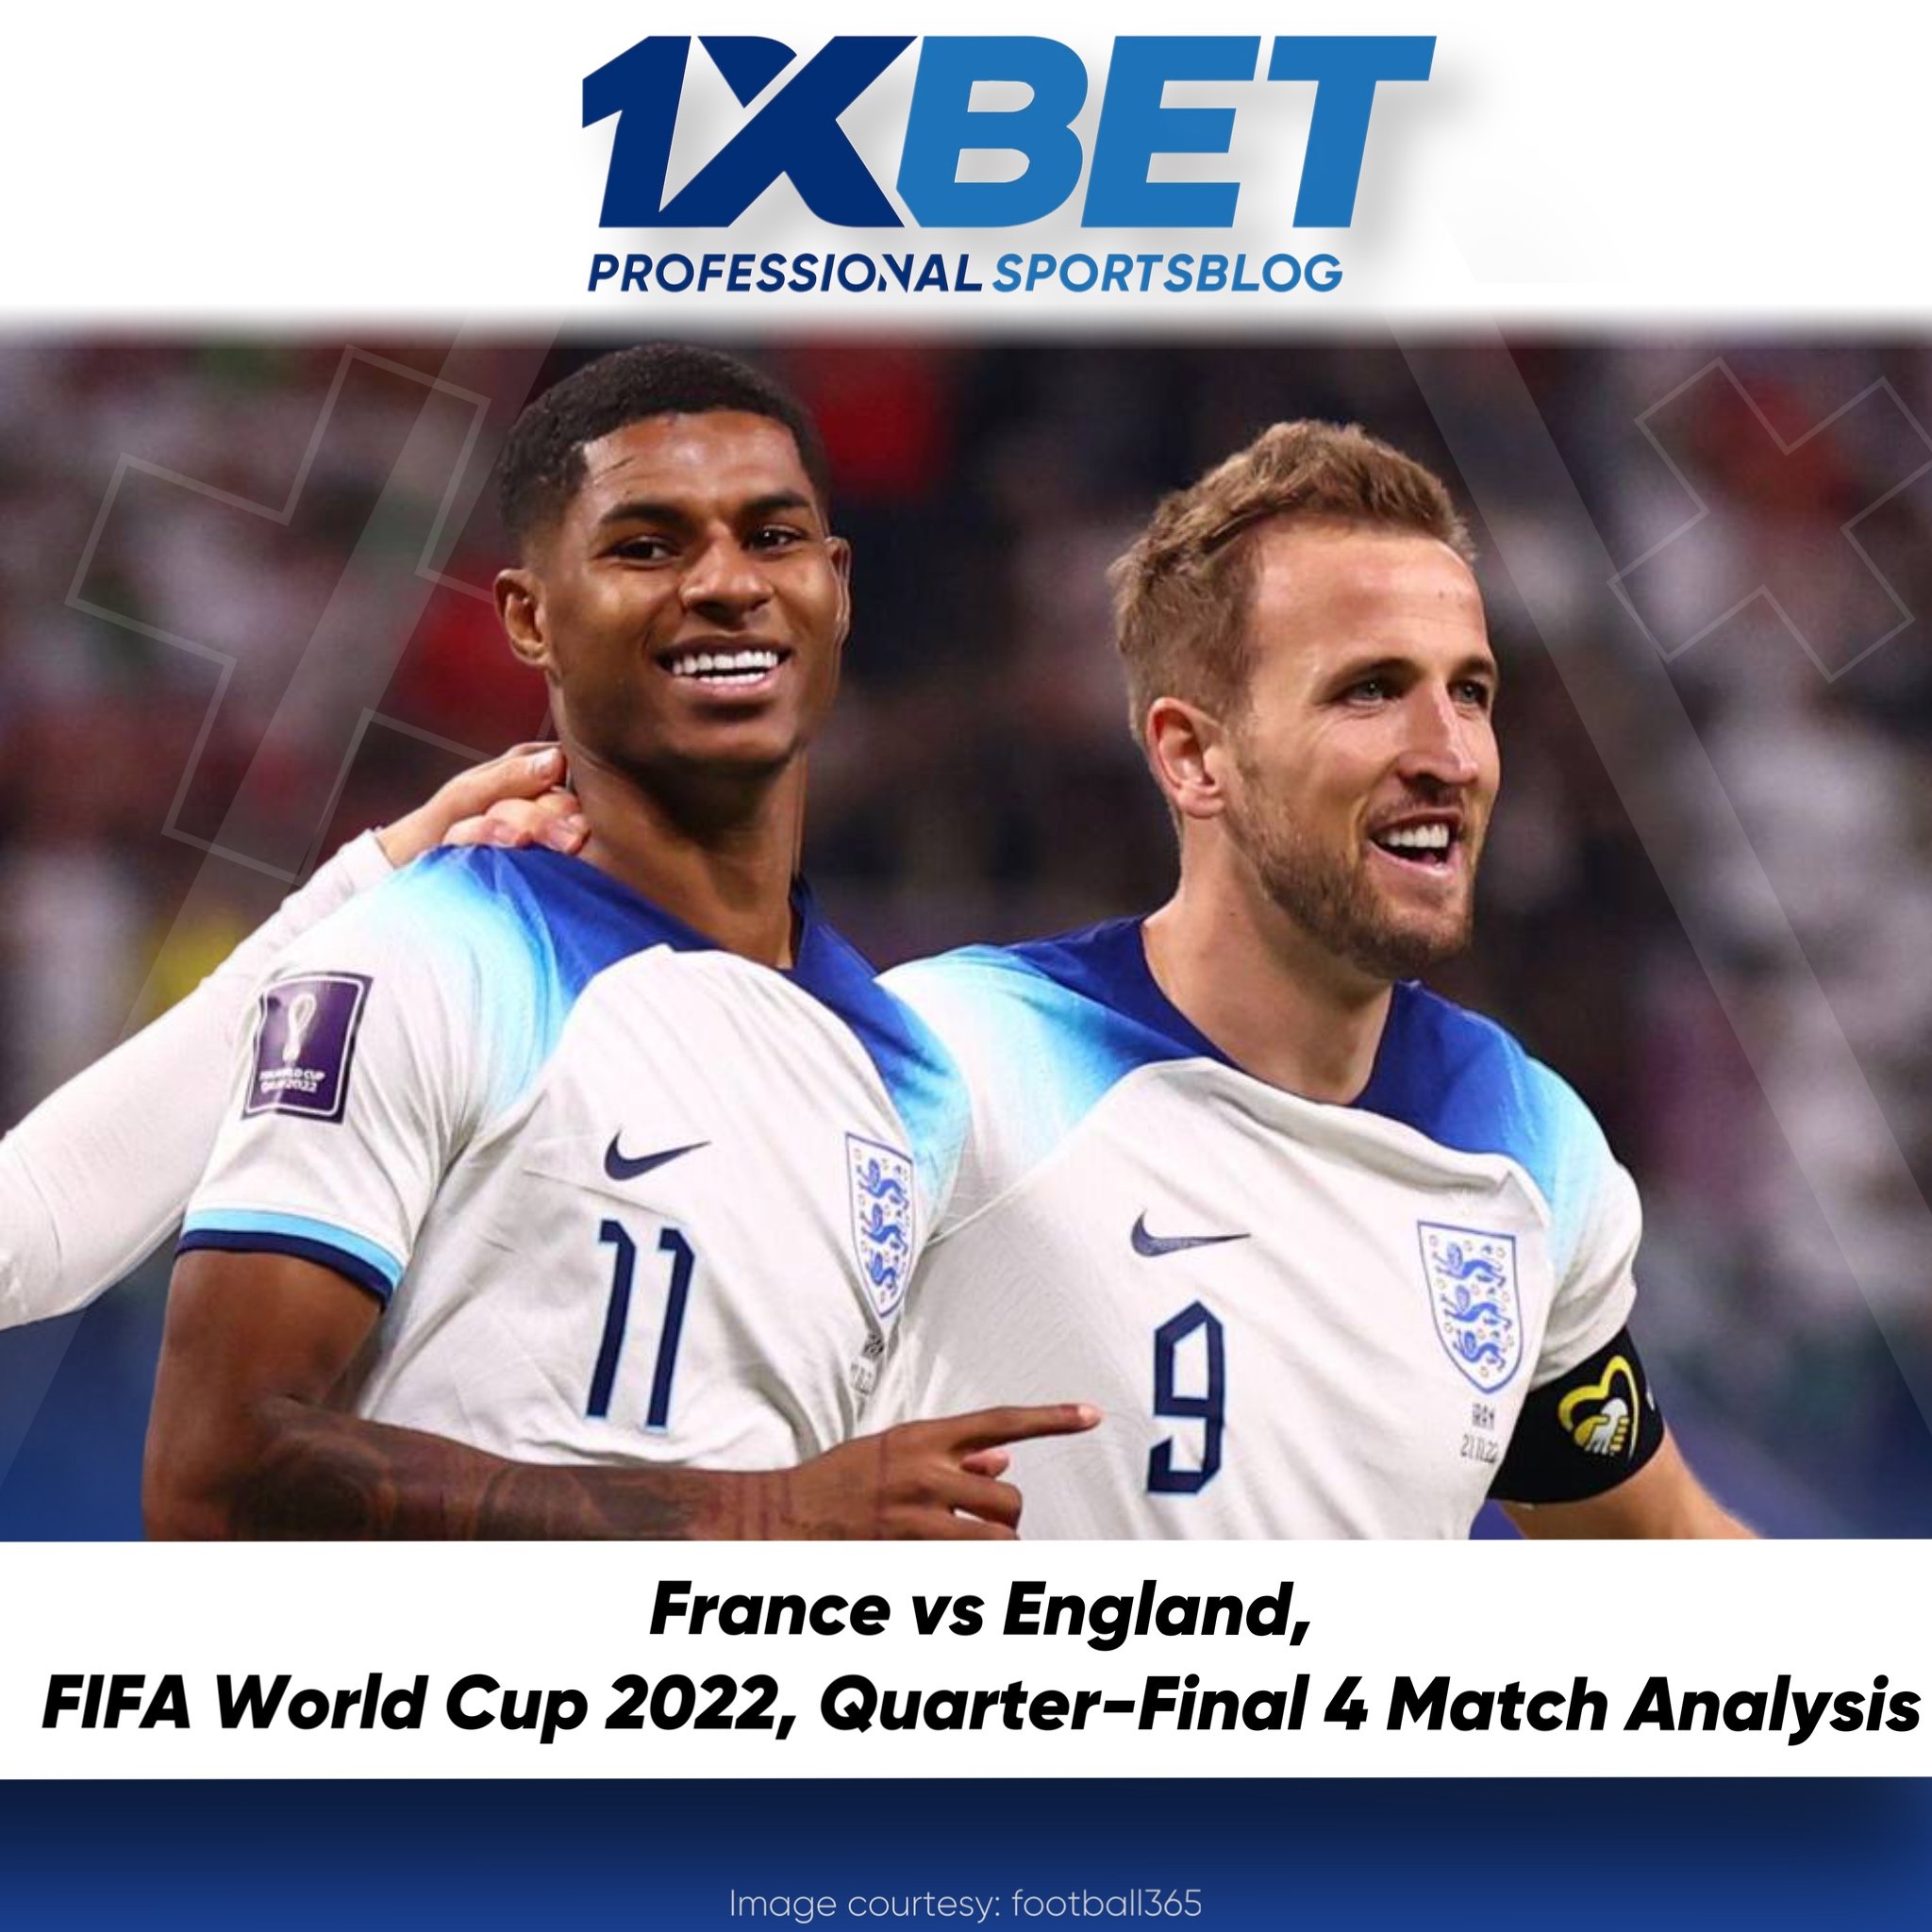 France vs England, FIFA World Cup 2022, Quarter-Final 4 Match Analysis